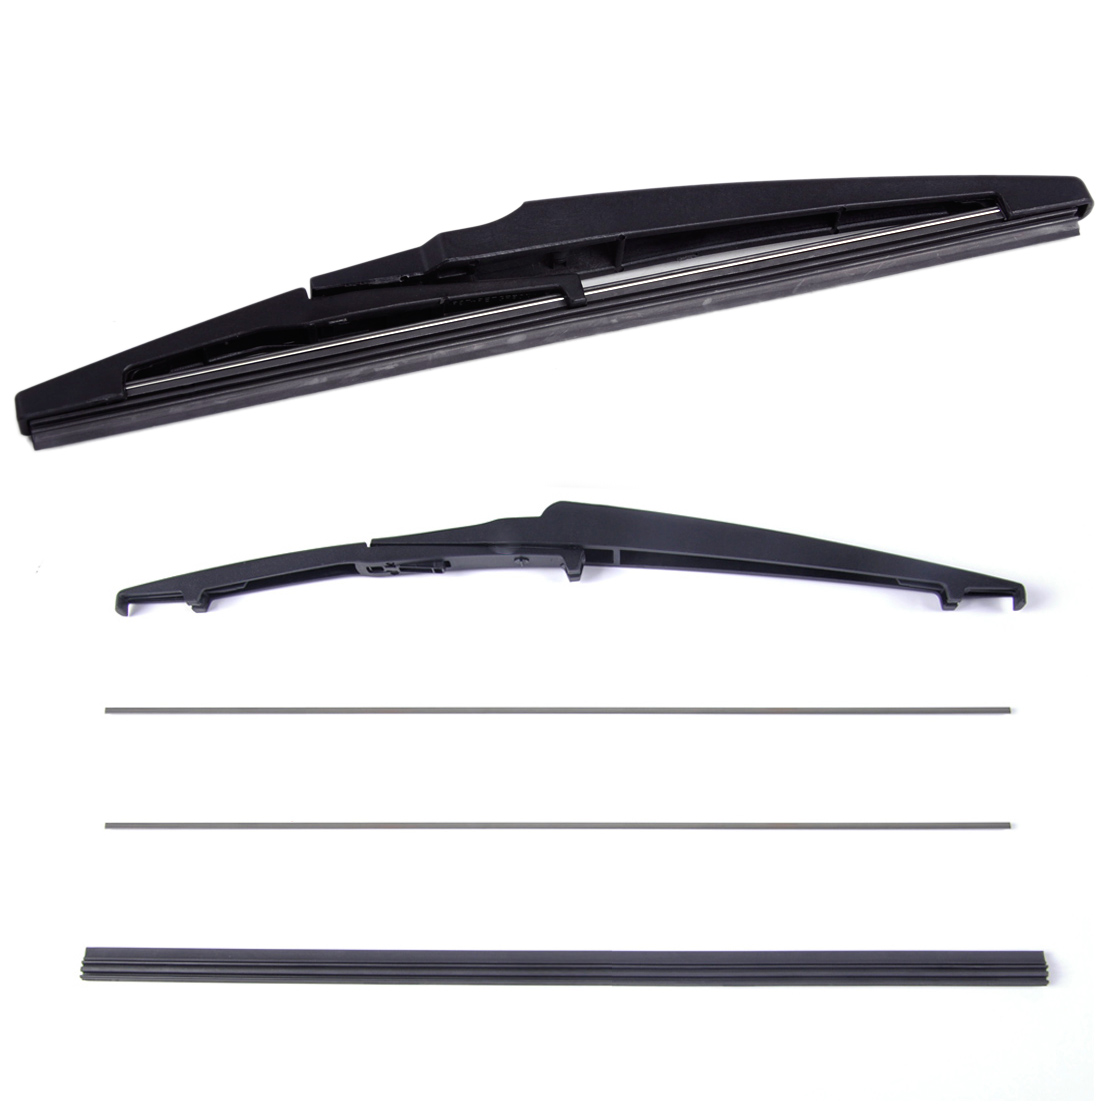 New Window Windshield Windscreen Rear Wiper Blade for Kia Soul Sorento 2010-2013 | eBay 2013 Kia Sorento Rear Wiper Blade Size